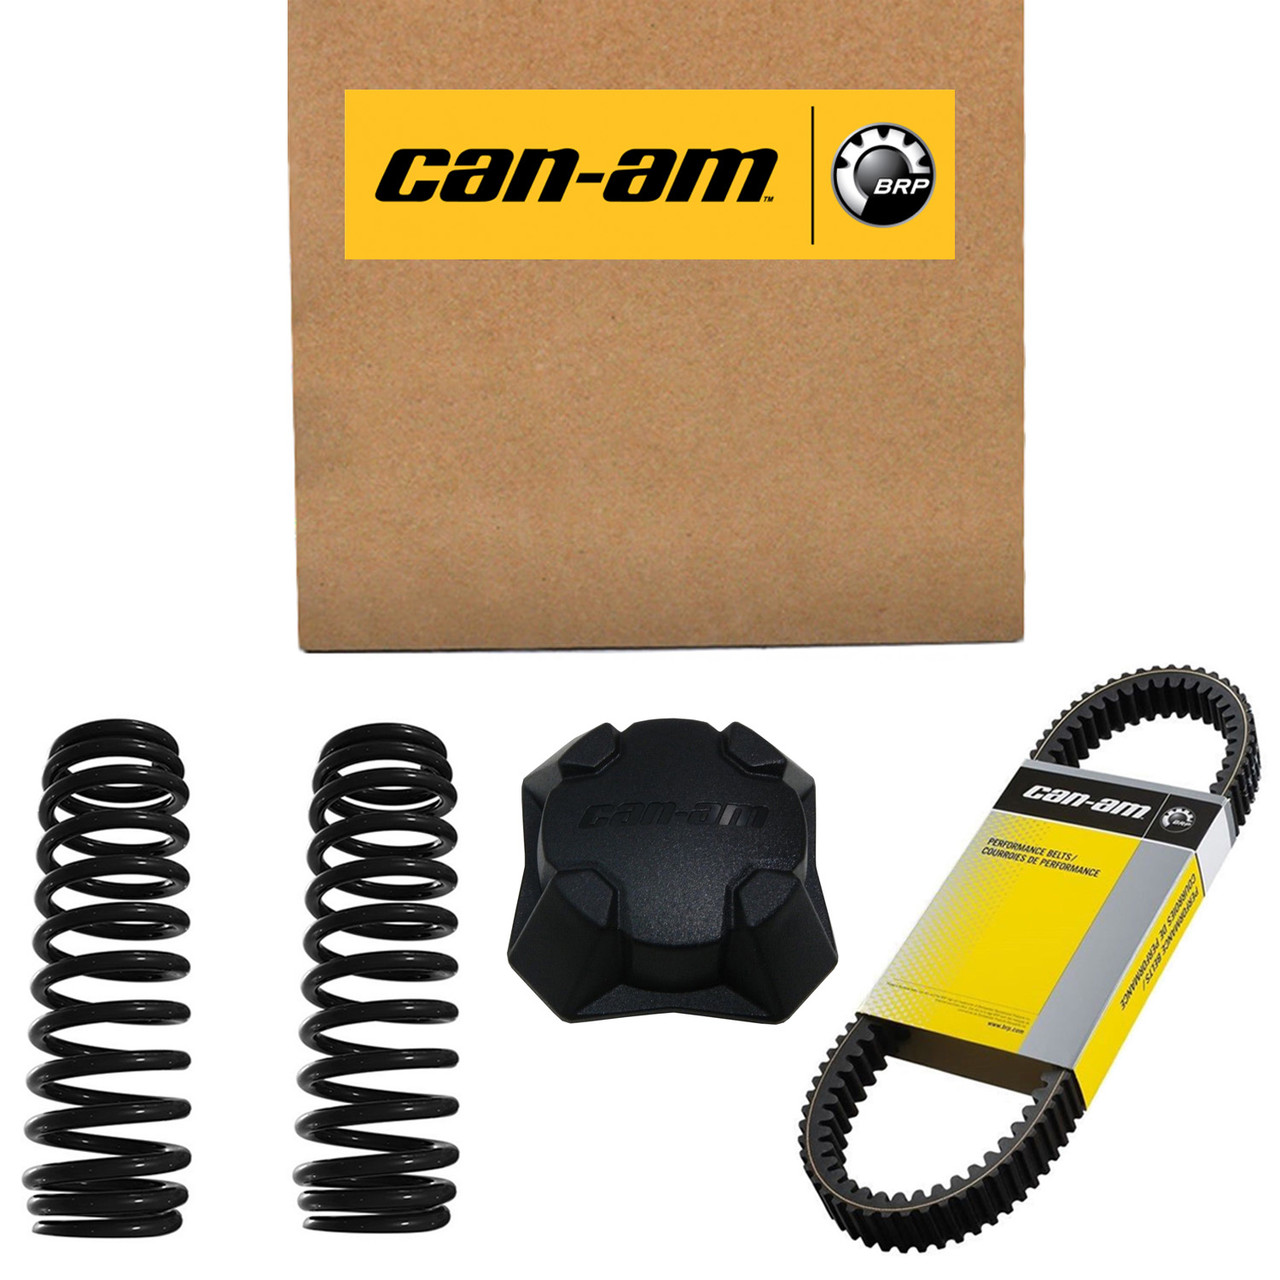 Can-Am New OEM Gear Box, 420686754